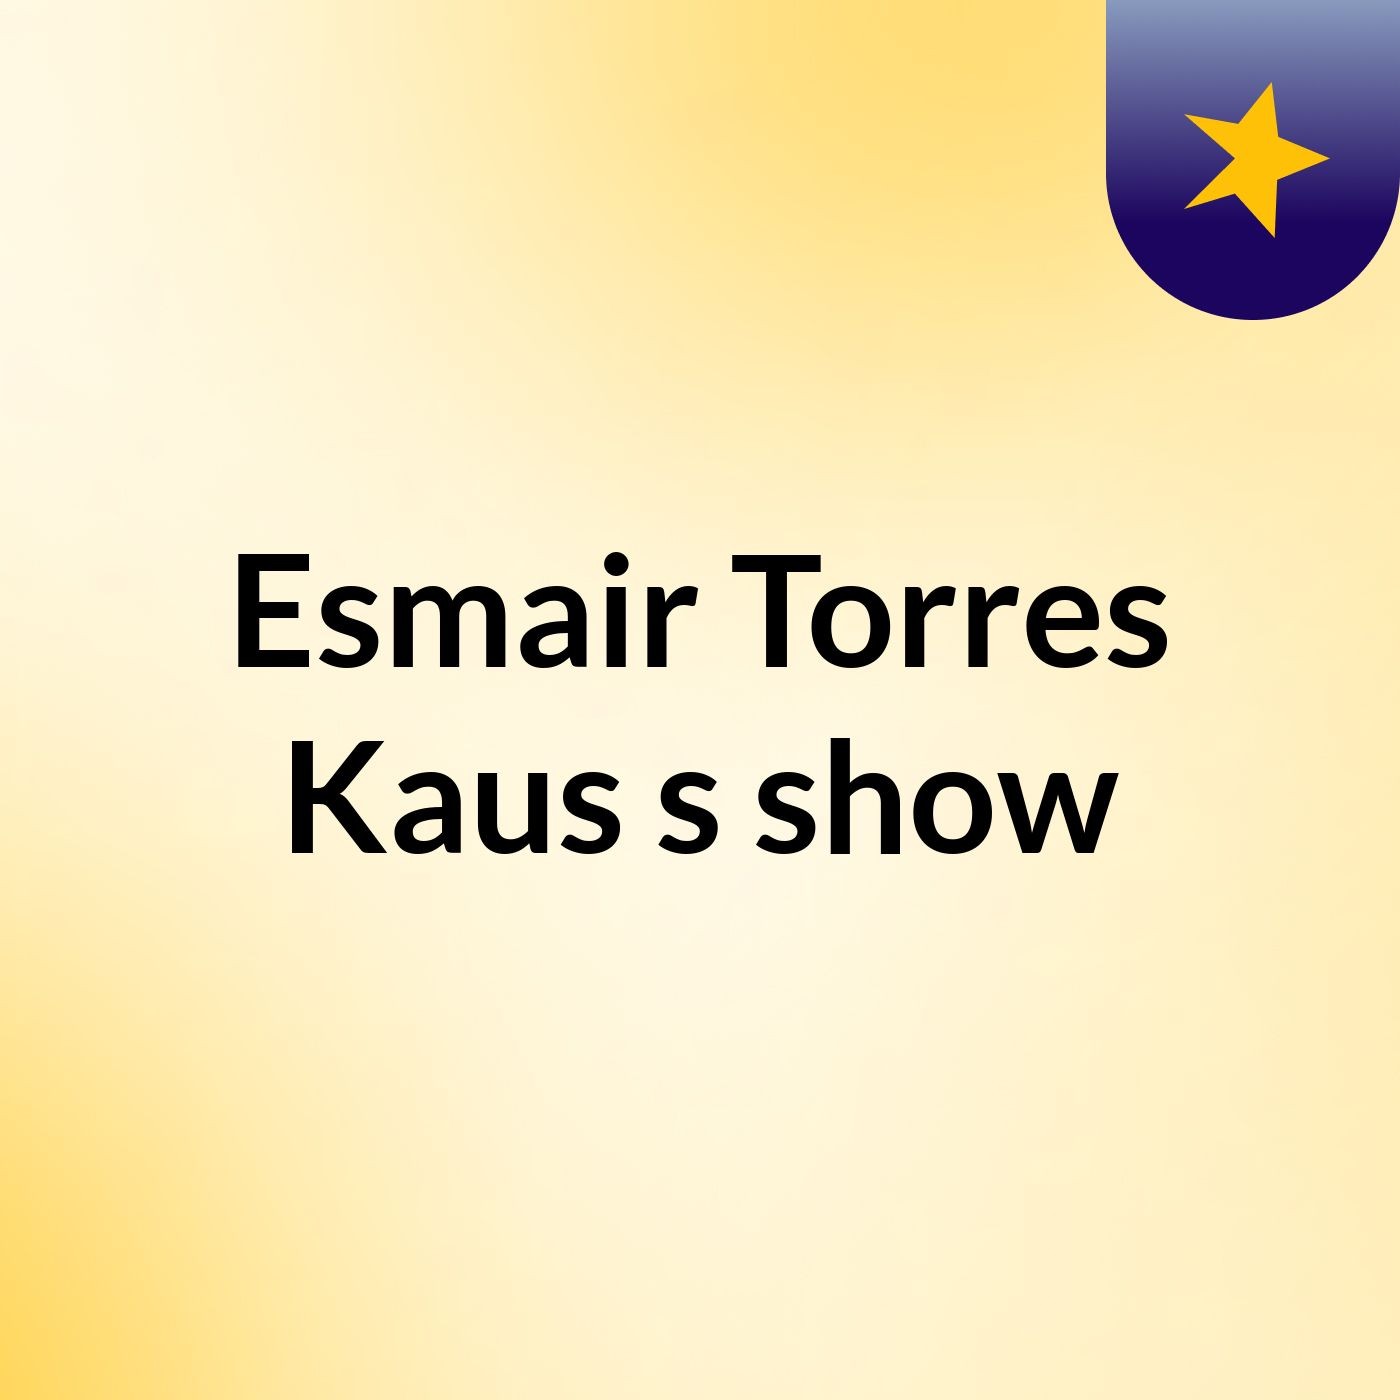 Esmair Torres Kaus's show